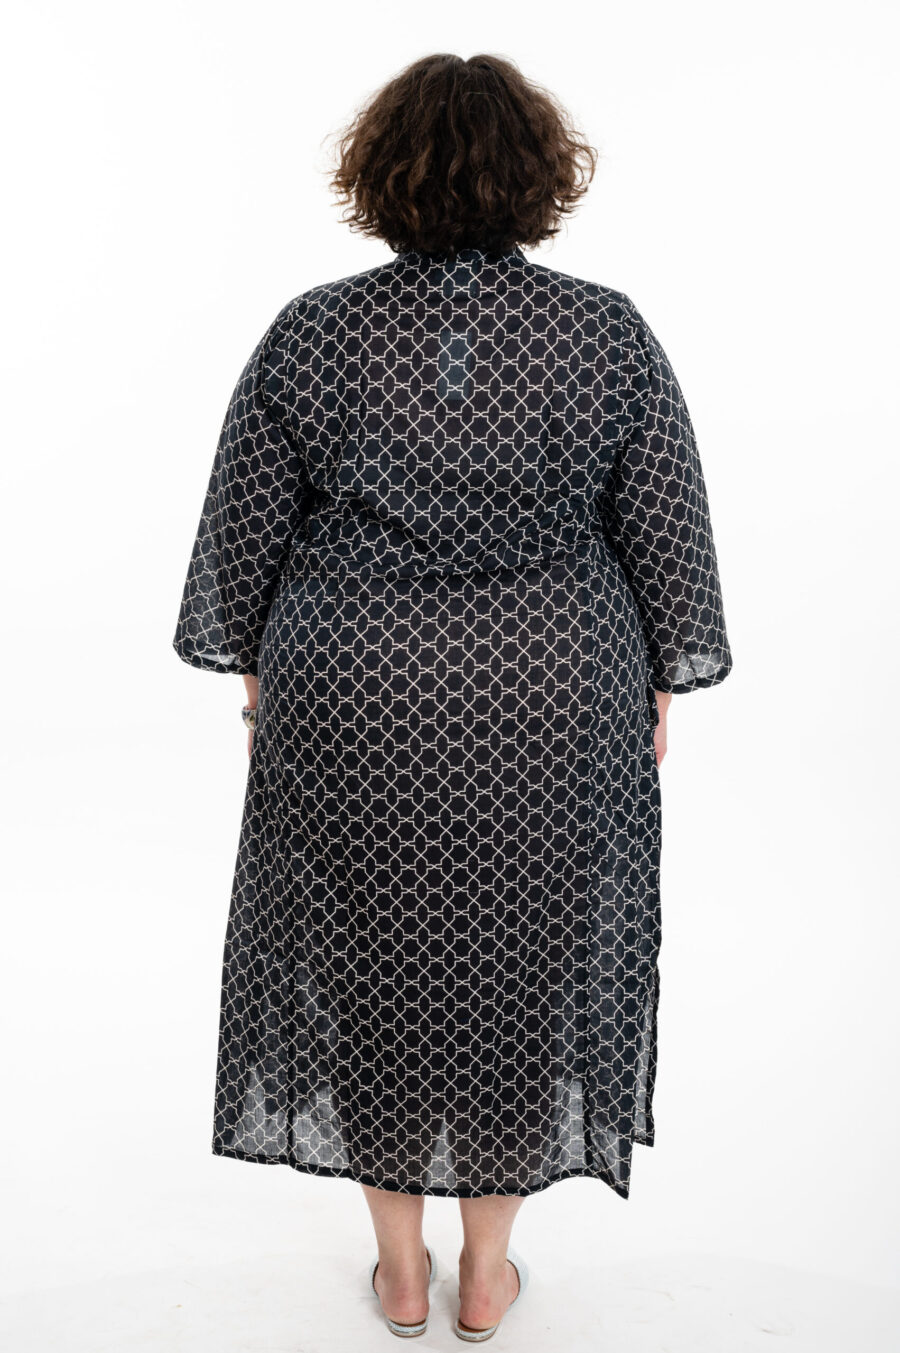 Jalabiya dress | Uniquely designed dress – Black dress with a white geometric print